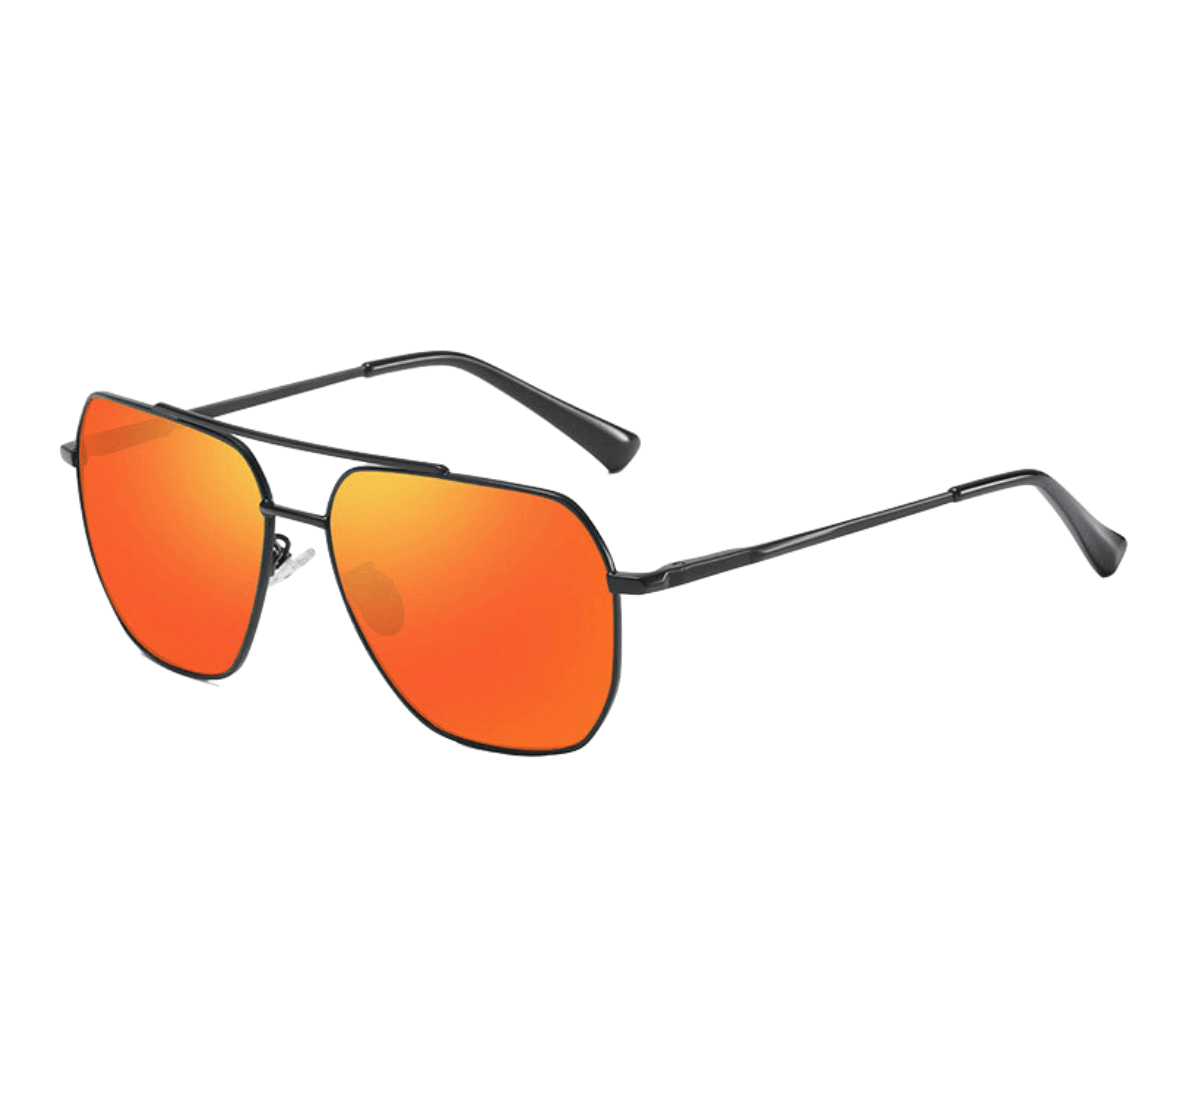 wholesale fashion sunglasses, metal sunglasses wholesale, Sunglasses Manufacturer, sunglasses supplier, fashion sunglasses wholesale suppliers